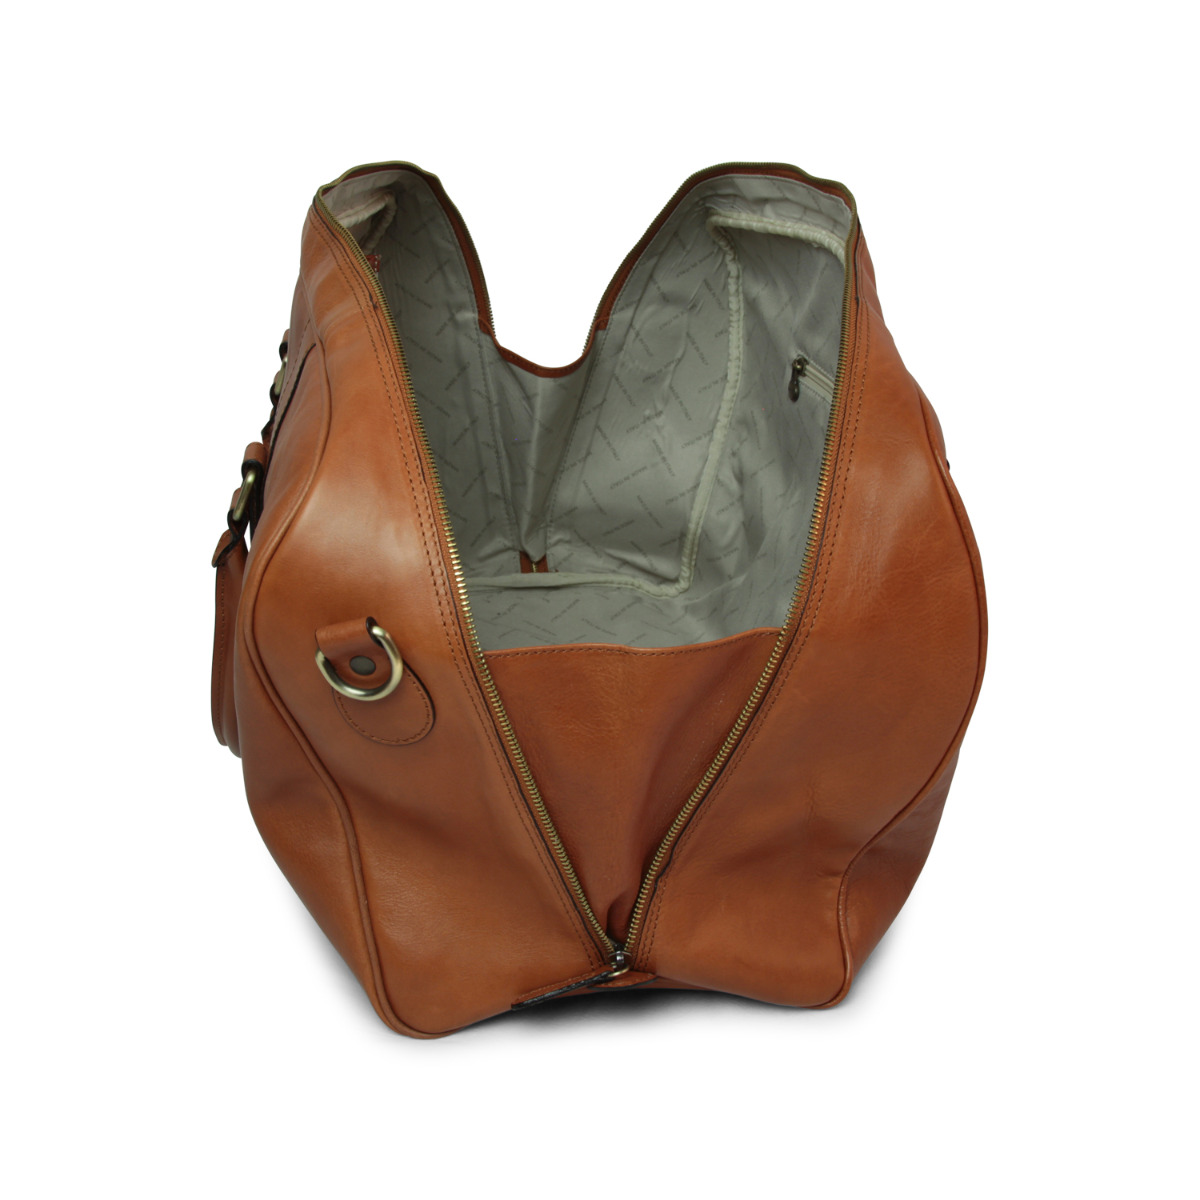 Full grain leather large travel bag - gold|414991CO|Old Angler Firenze